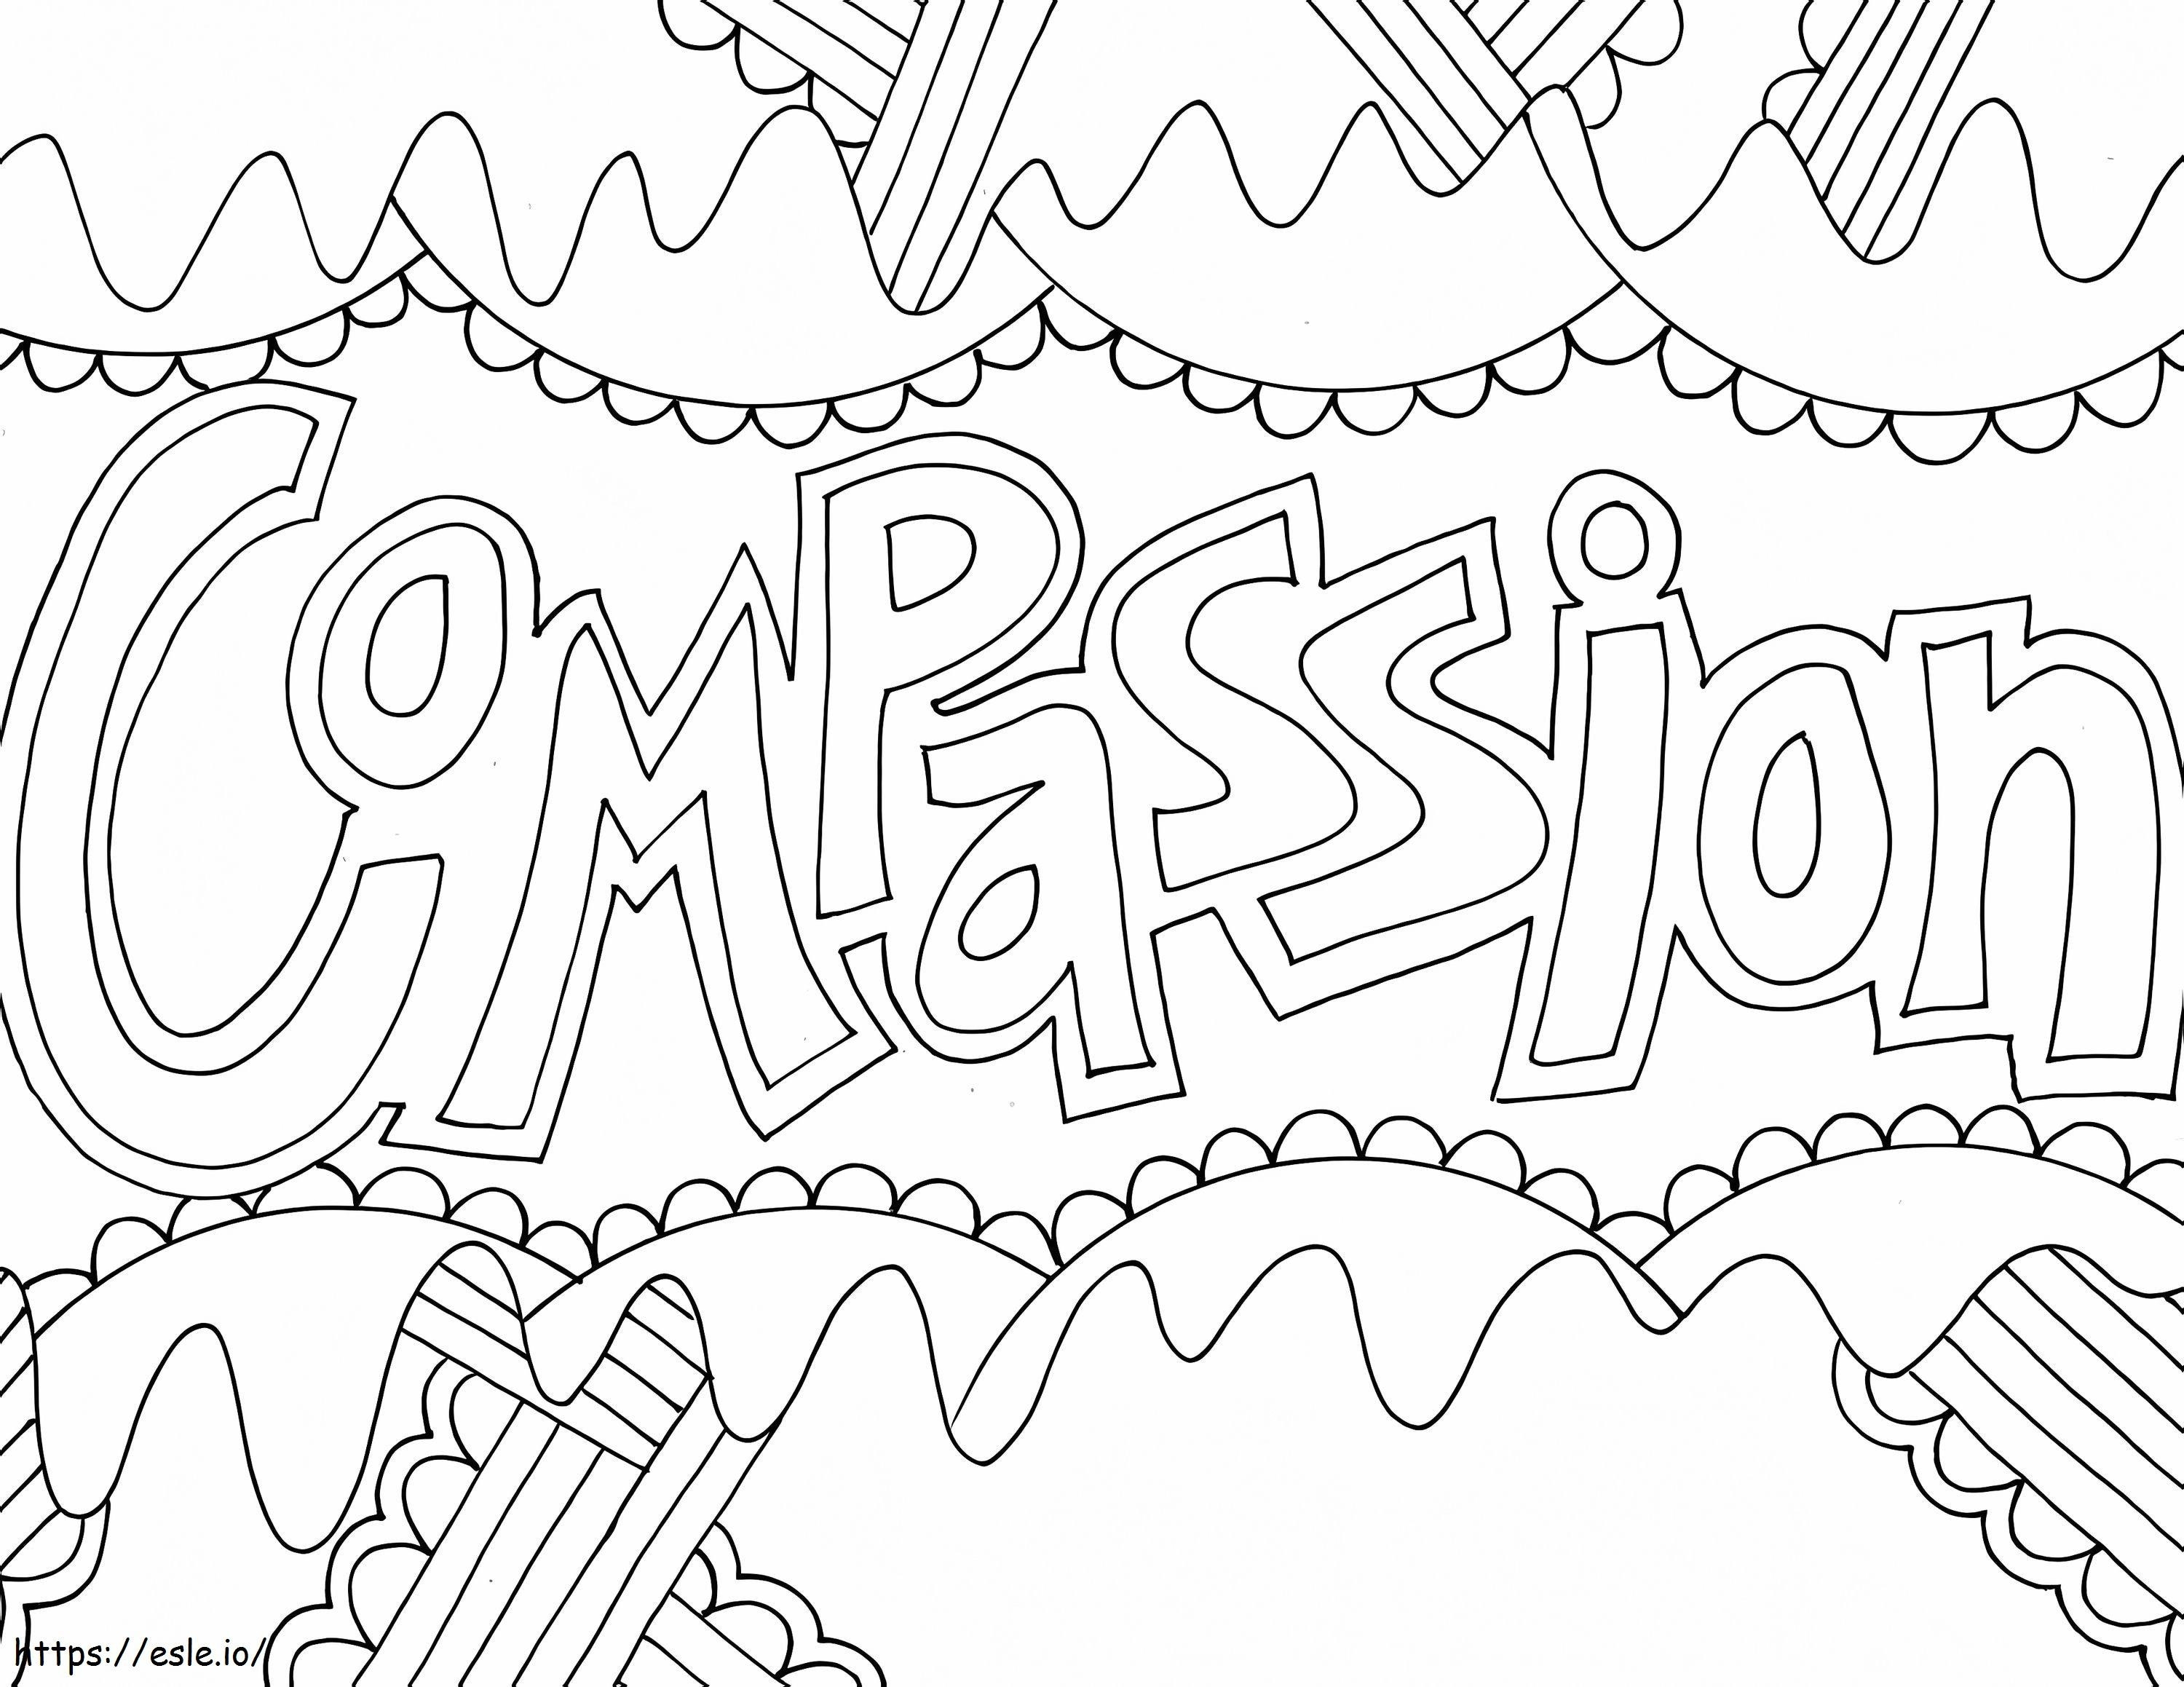 Compassion Doodle Art coloring page